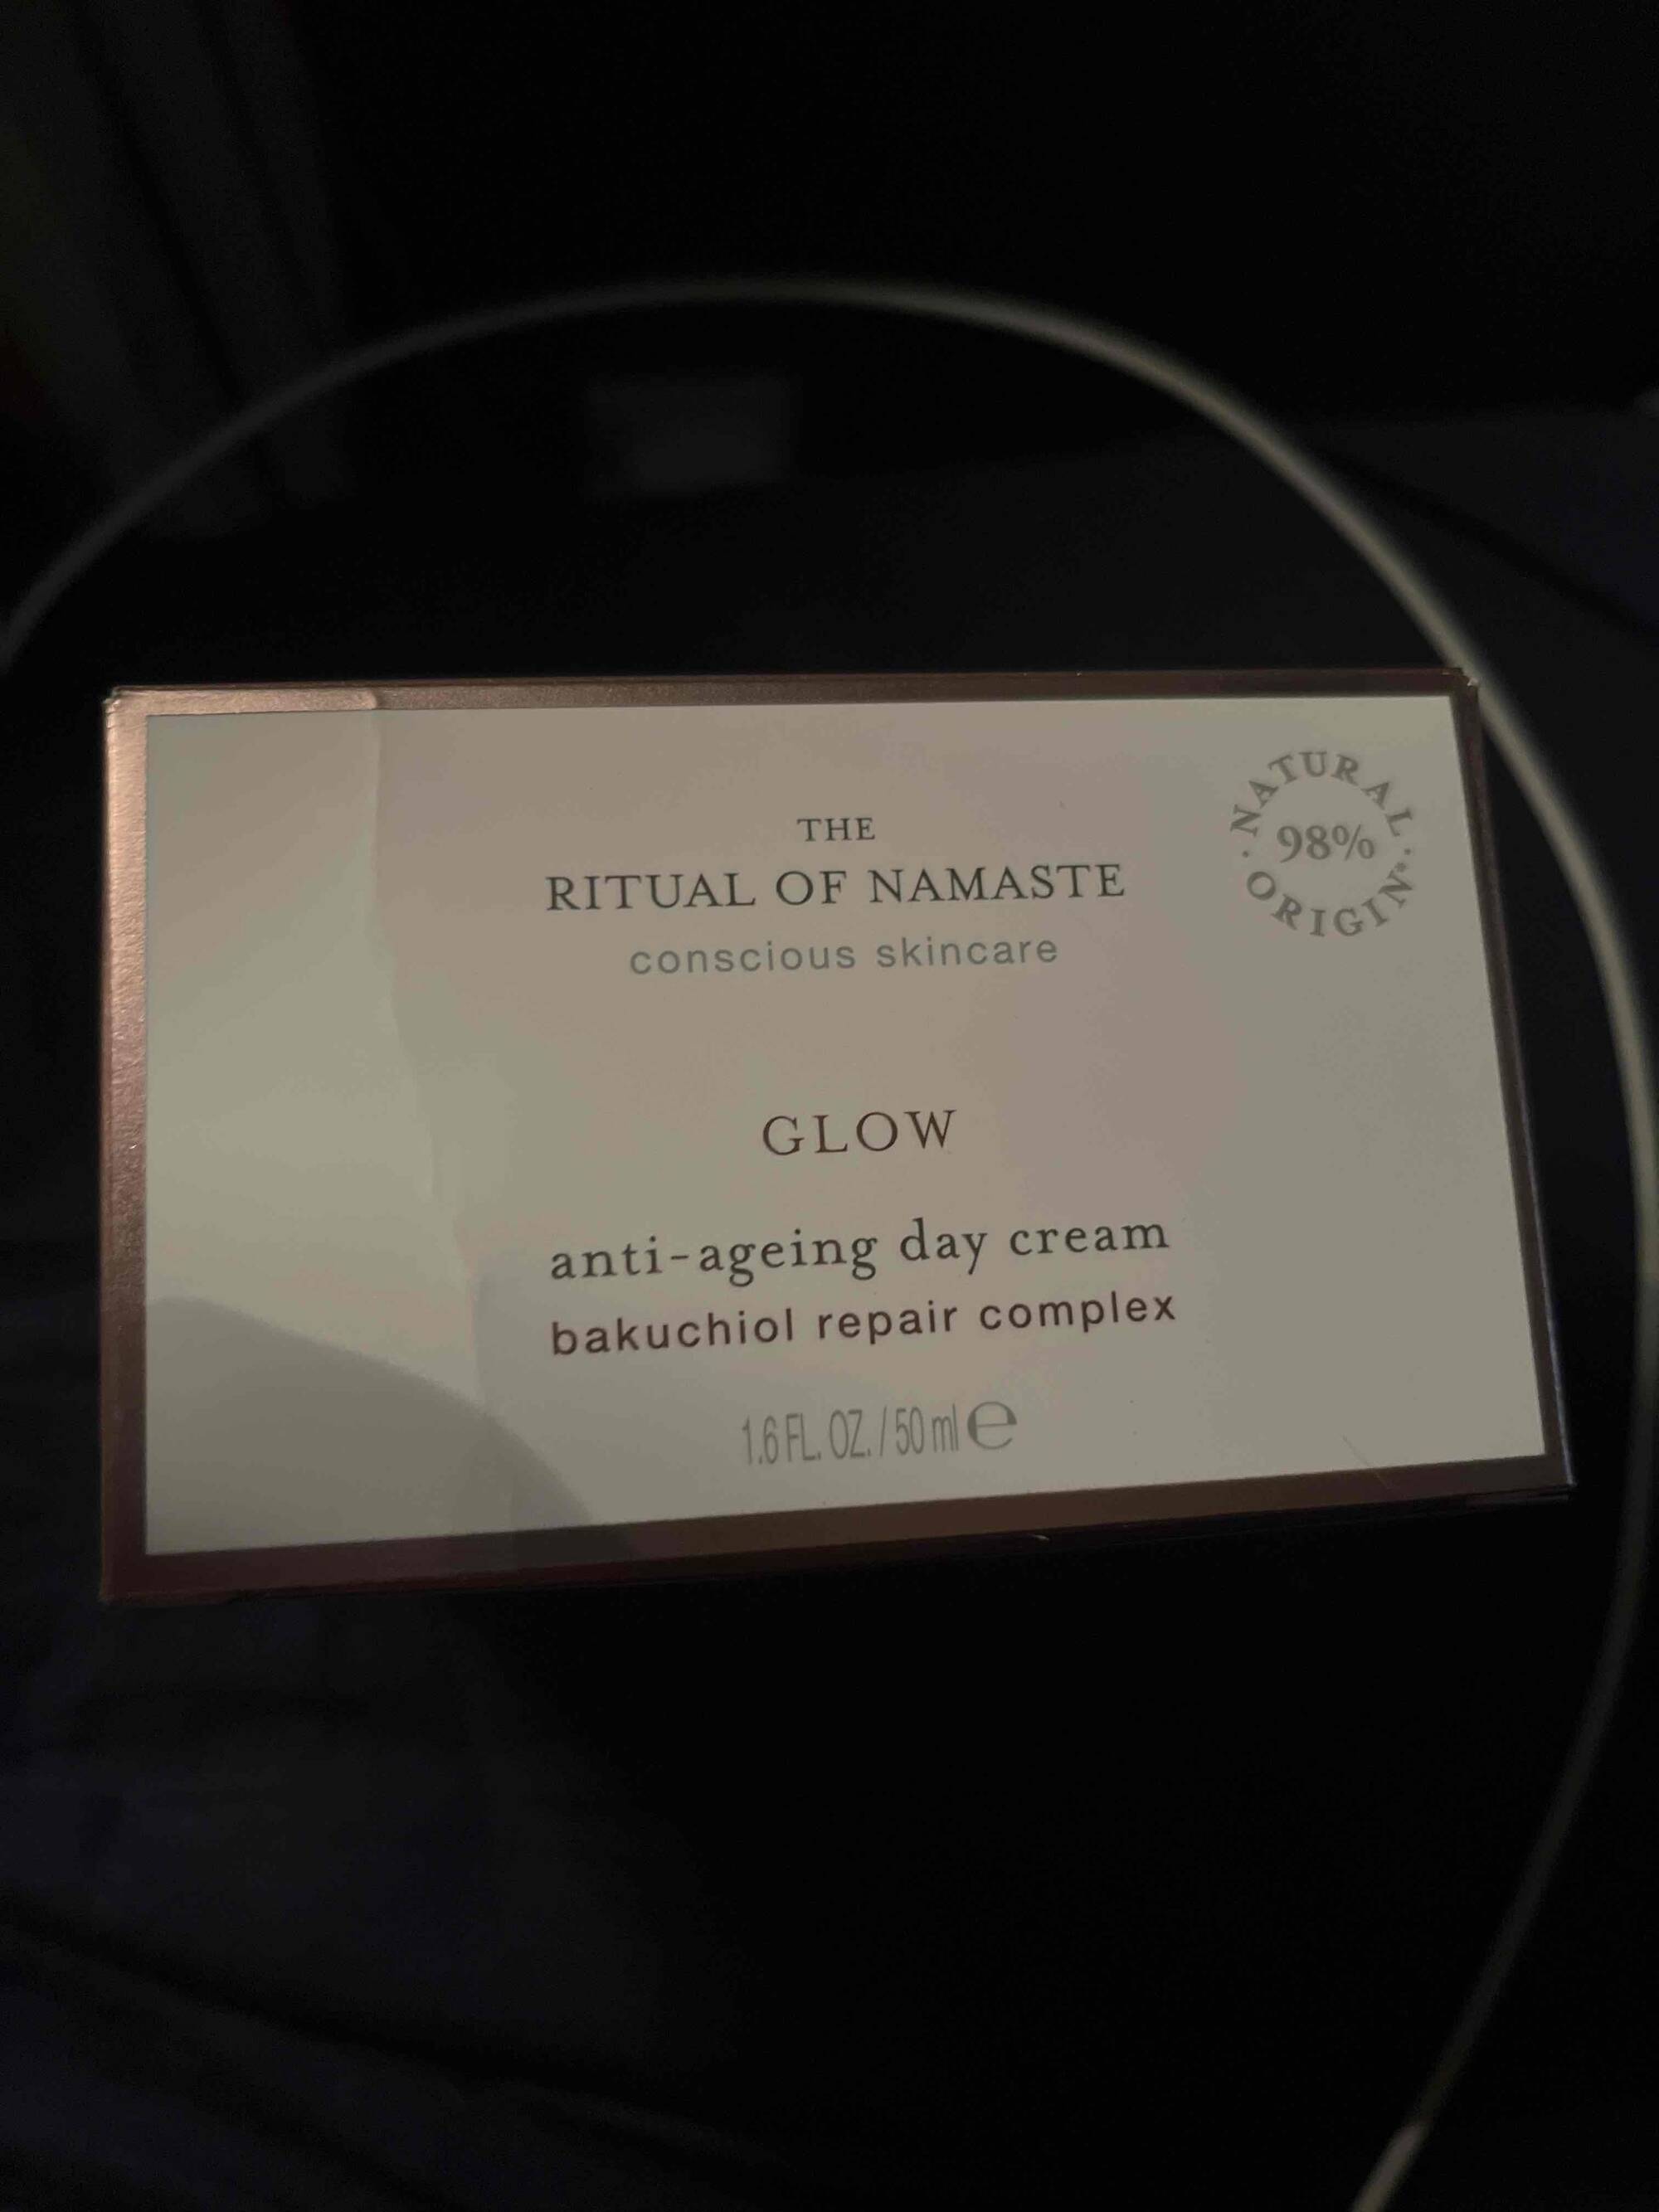 RITUALS - The ritual of namaste - Anti-ageing day cream